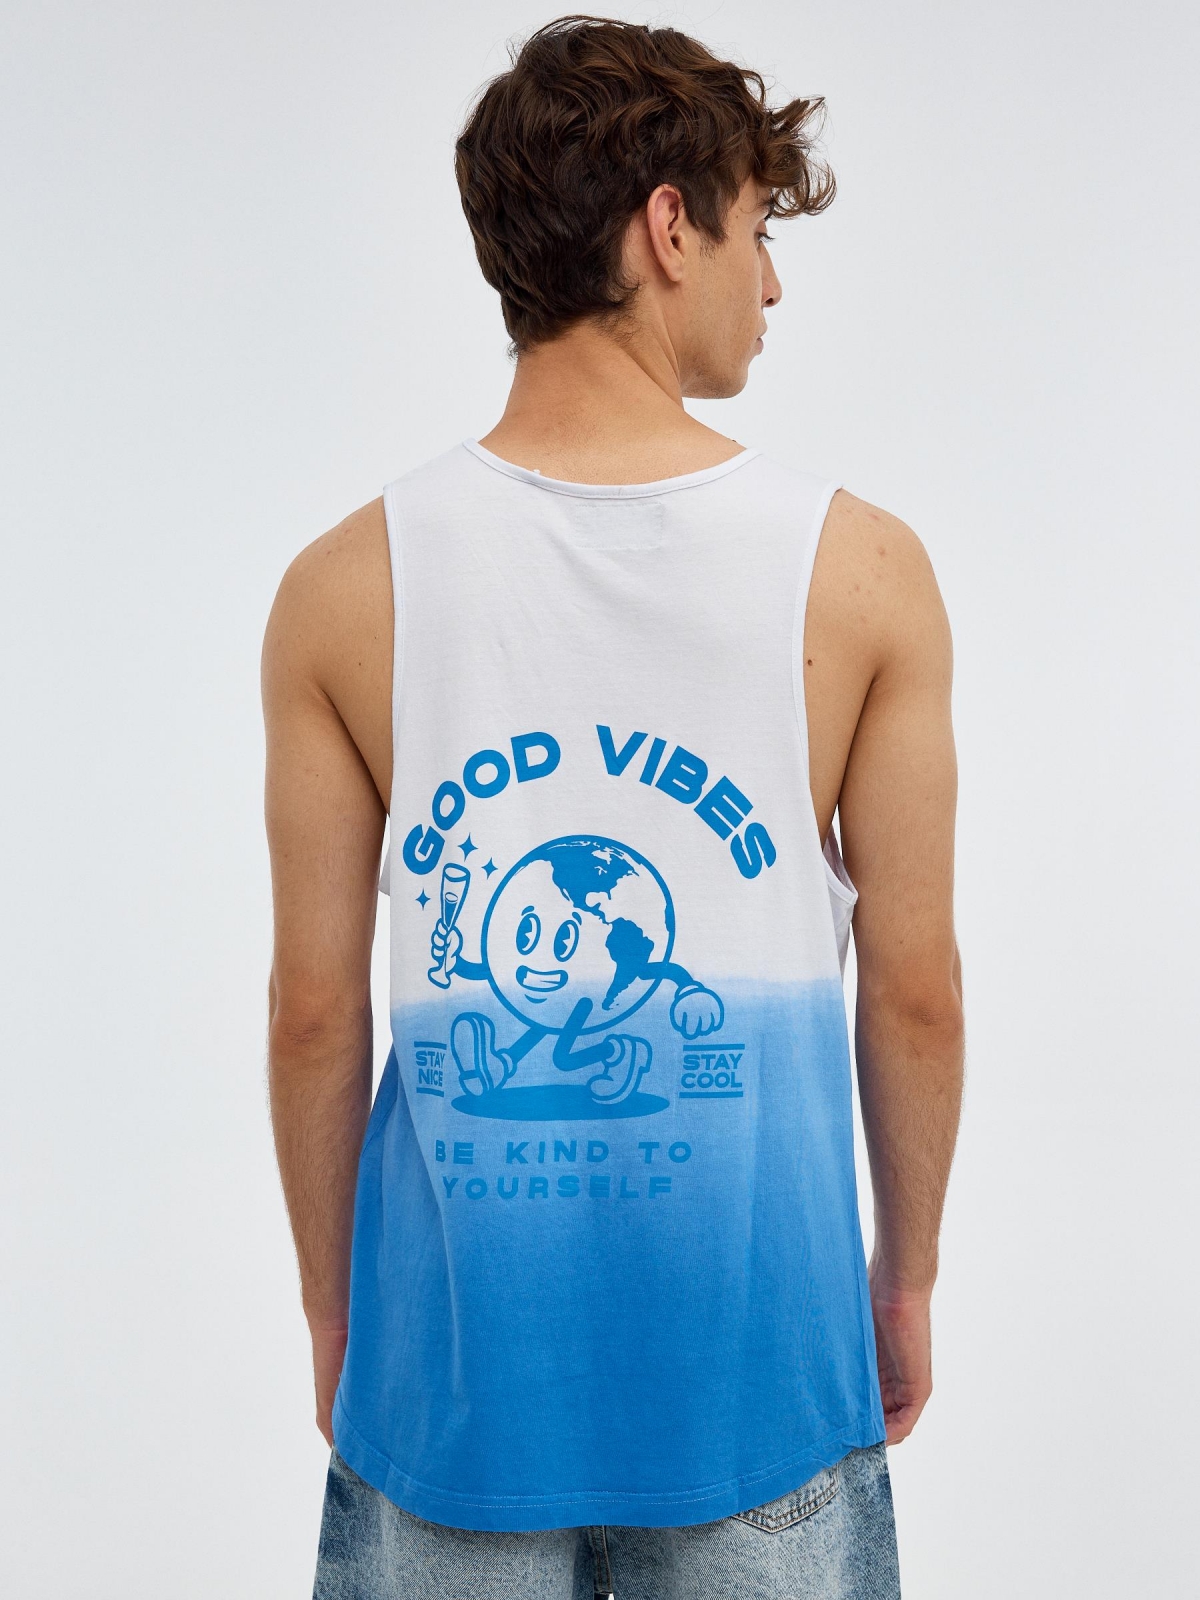 Camiseta tirantes degradada azul eléctrico vista media trasera